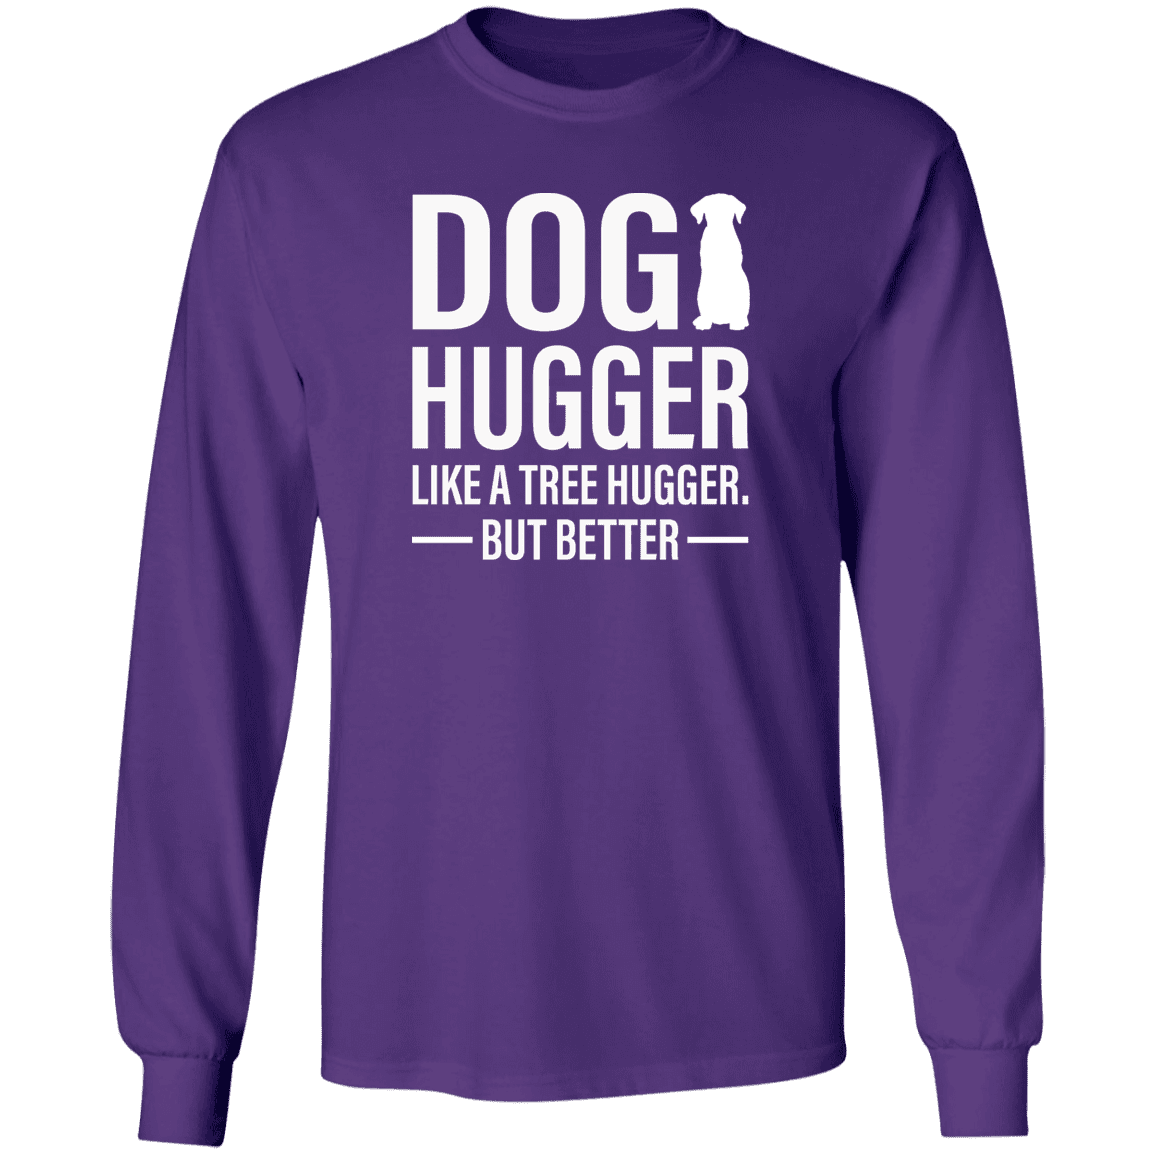 Dog Hugger - Long Sleeve T Shirt.